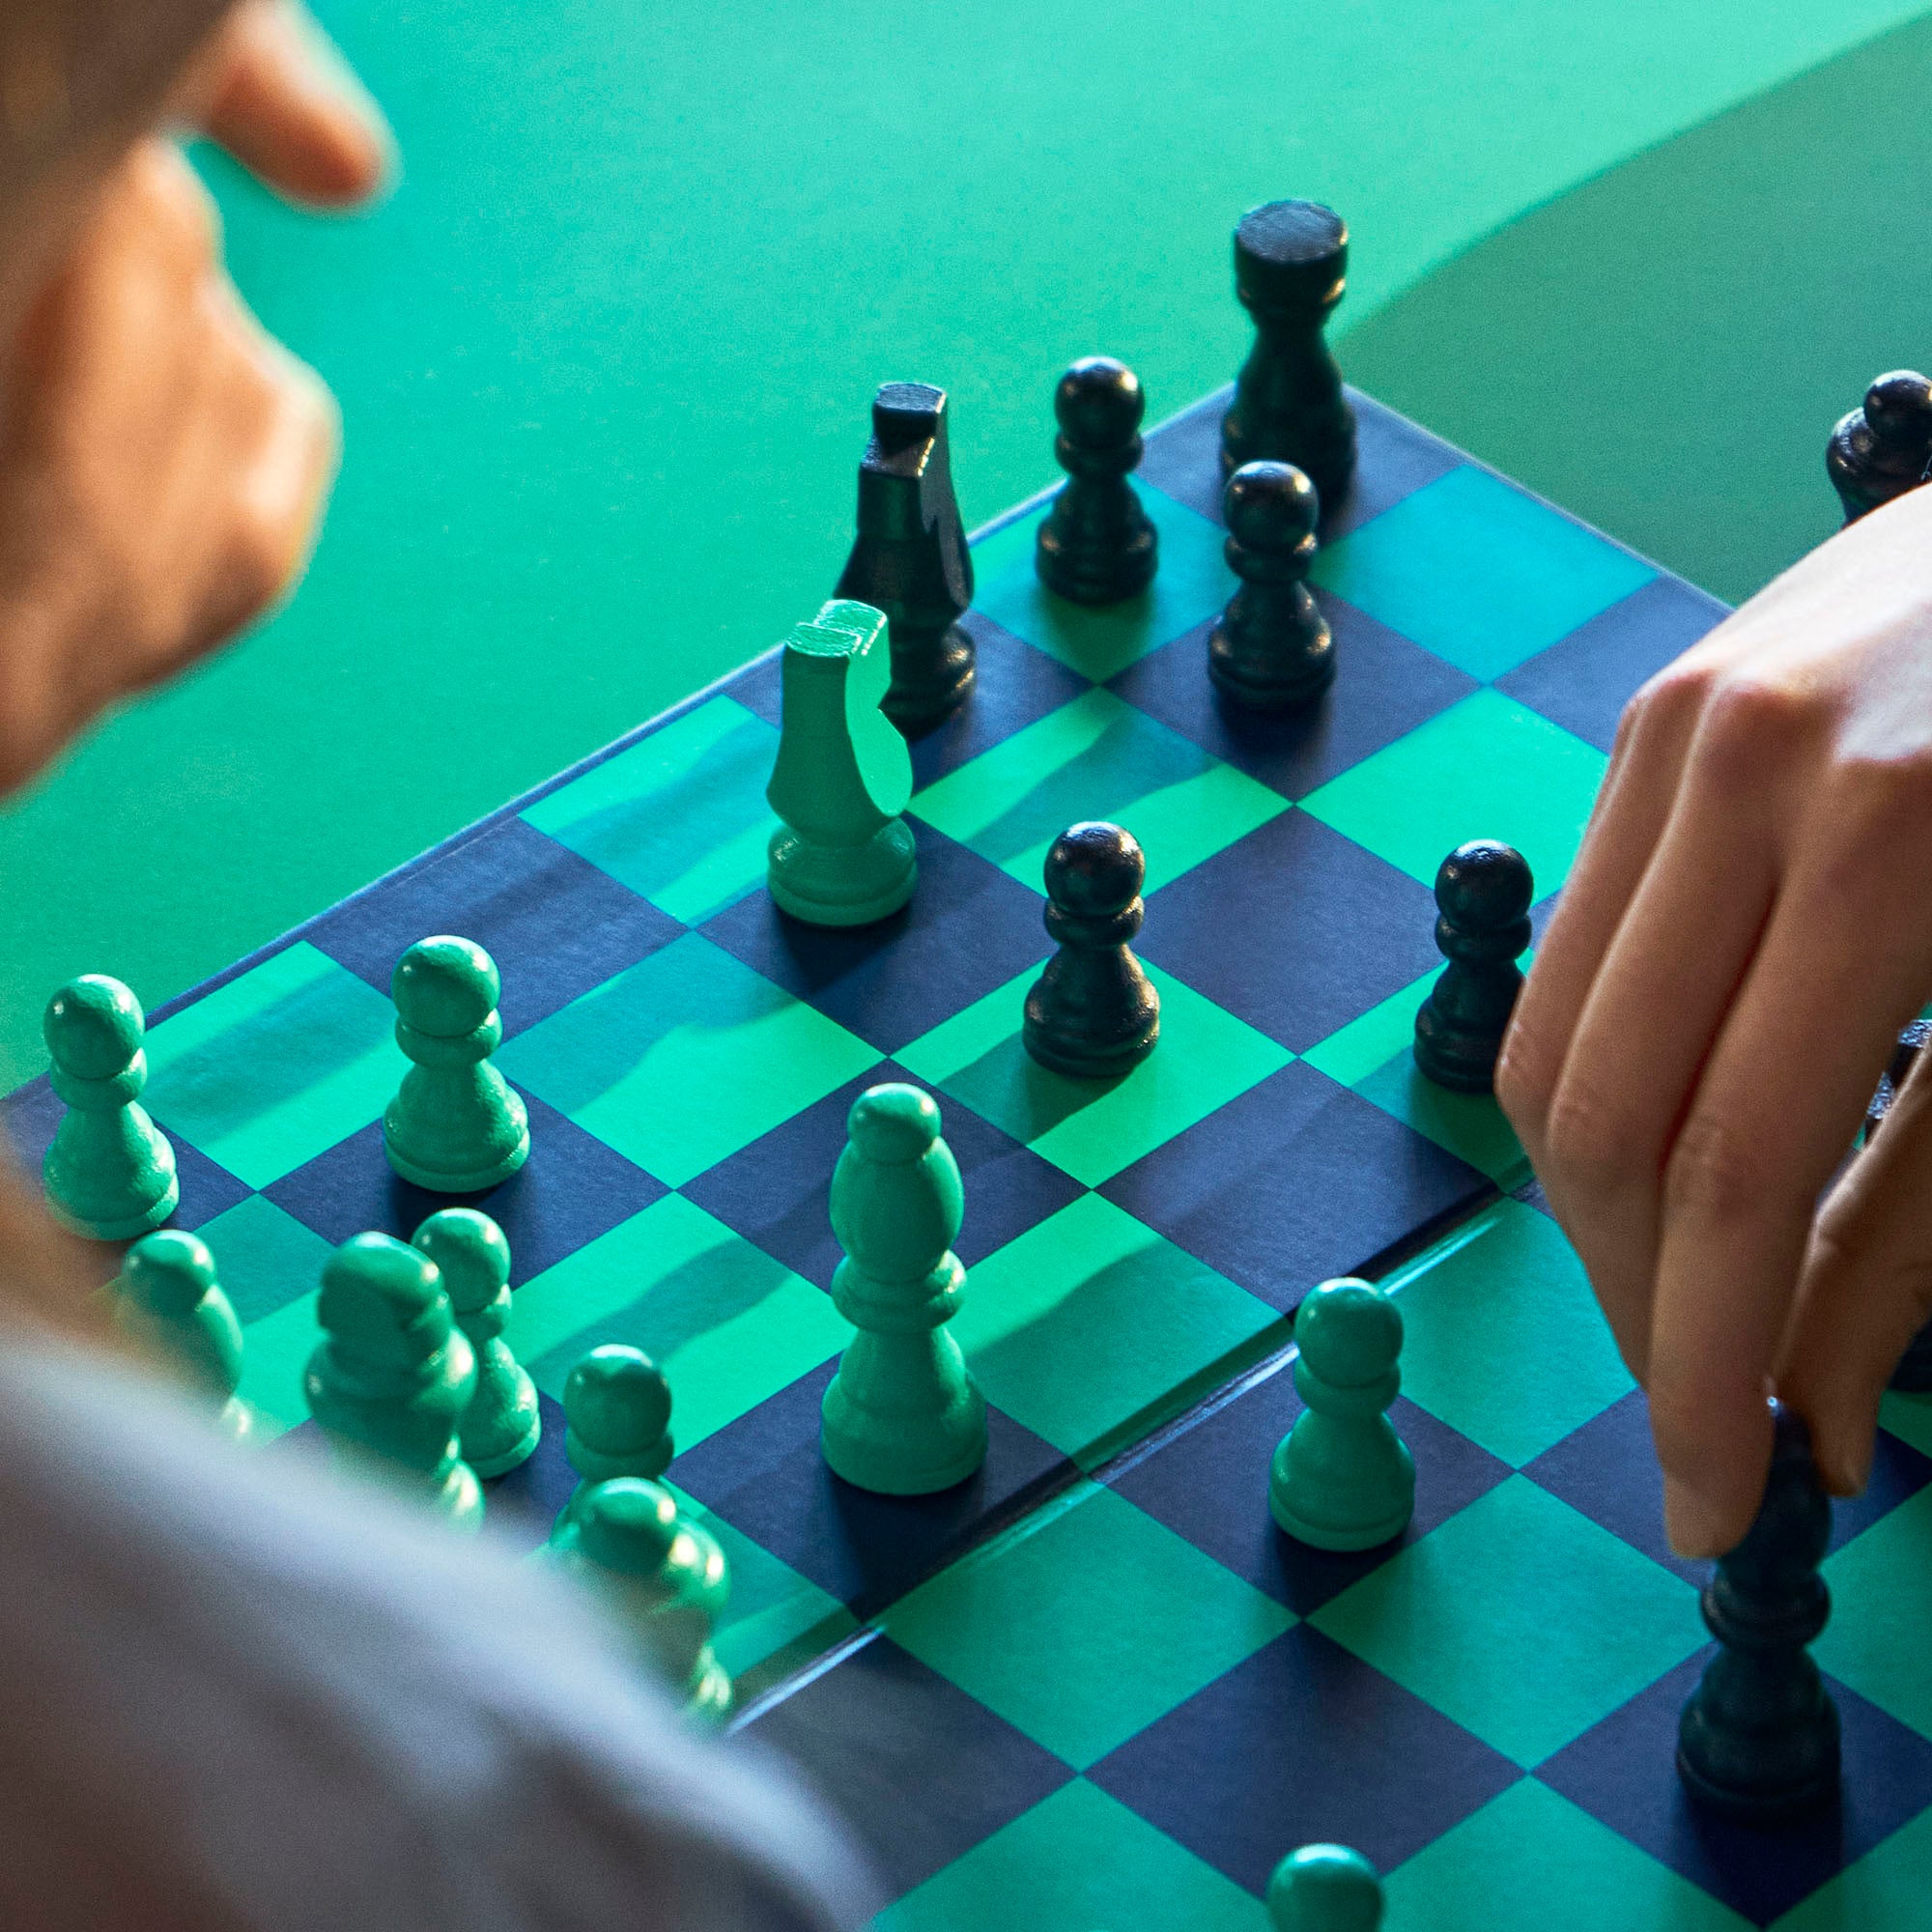 Play Chess, joc de șah